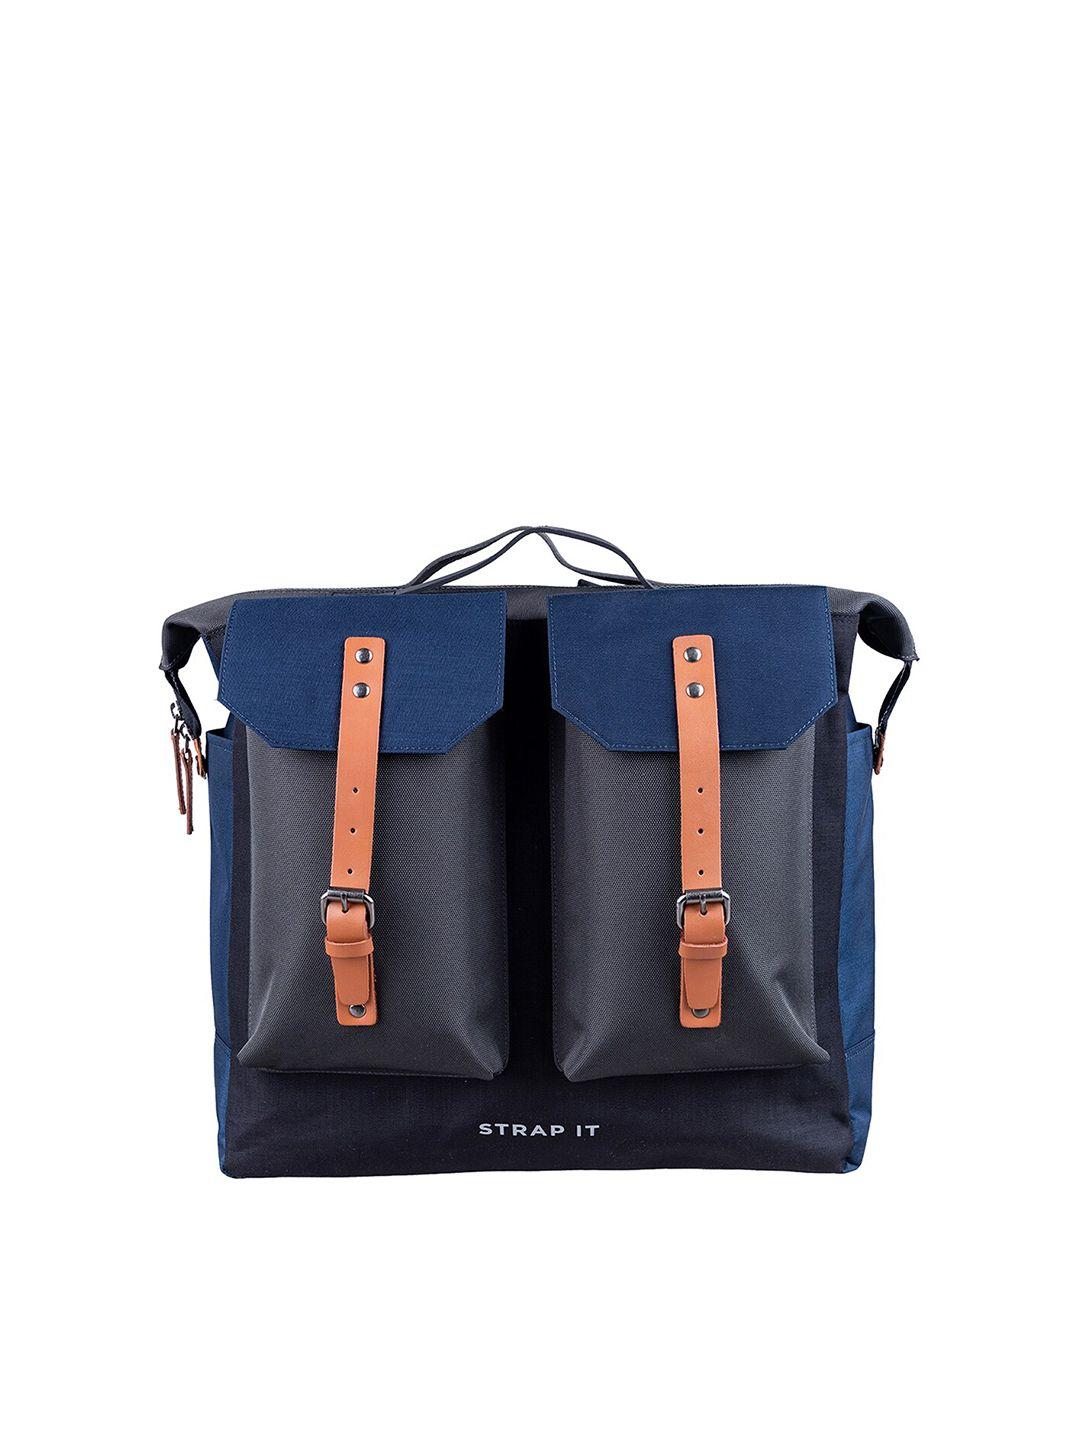 strap it unisex blue & black leather backpack with shoe pocket